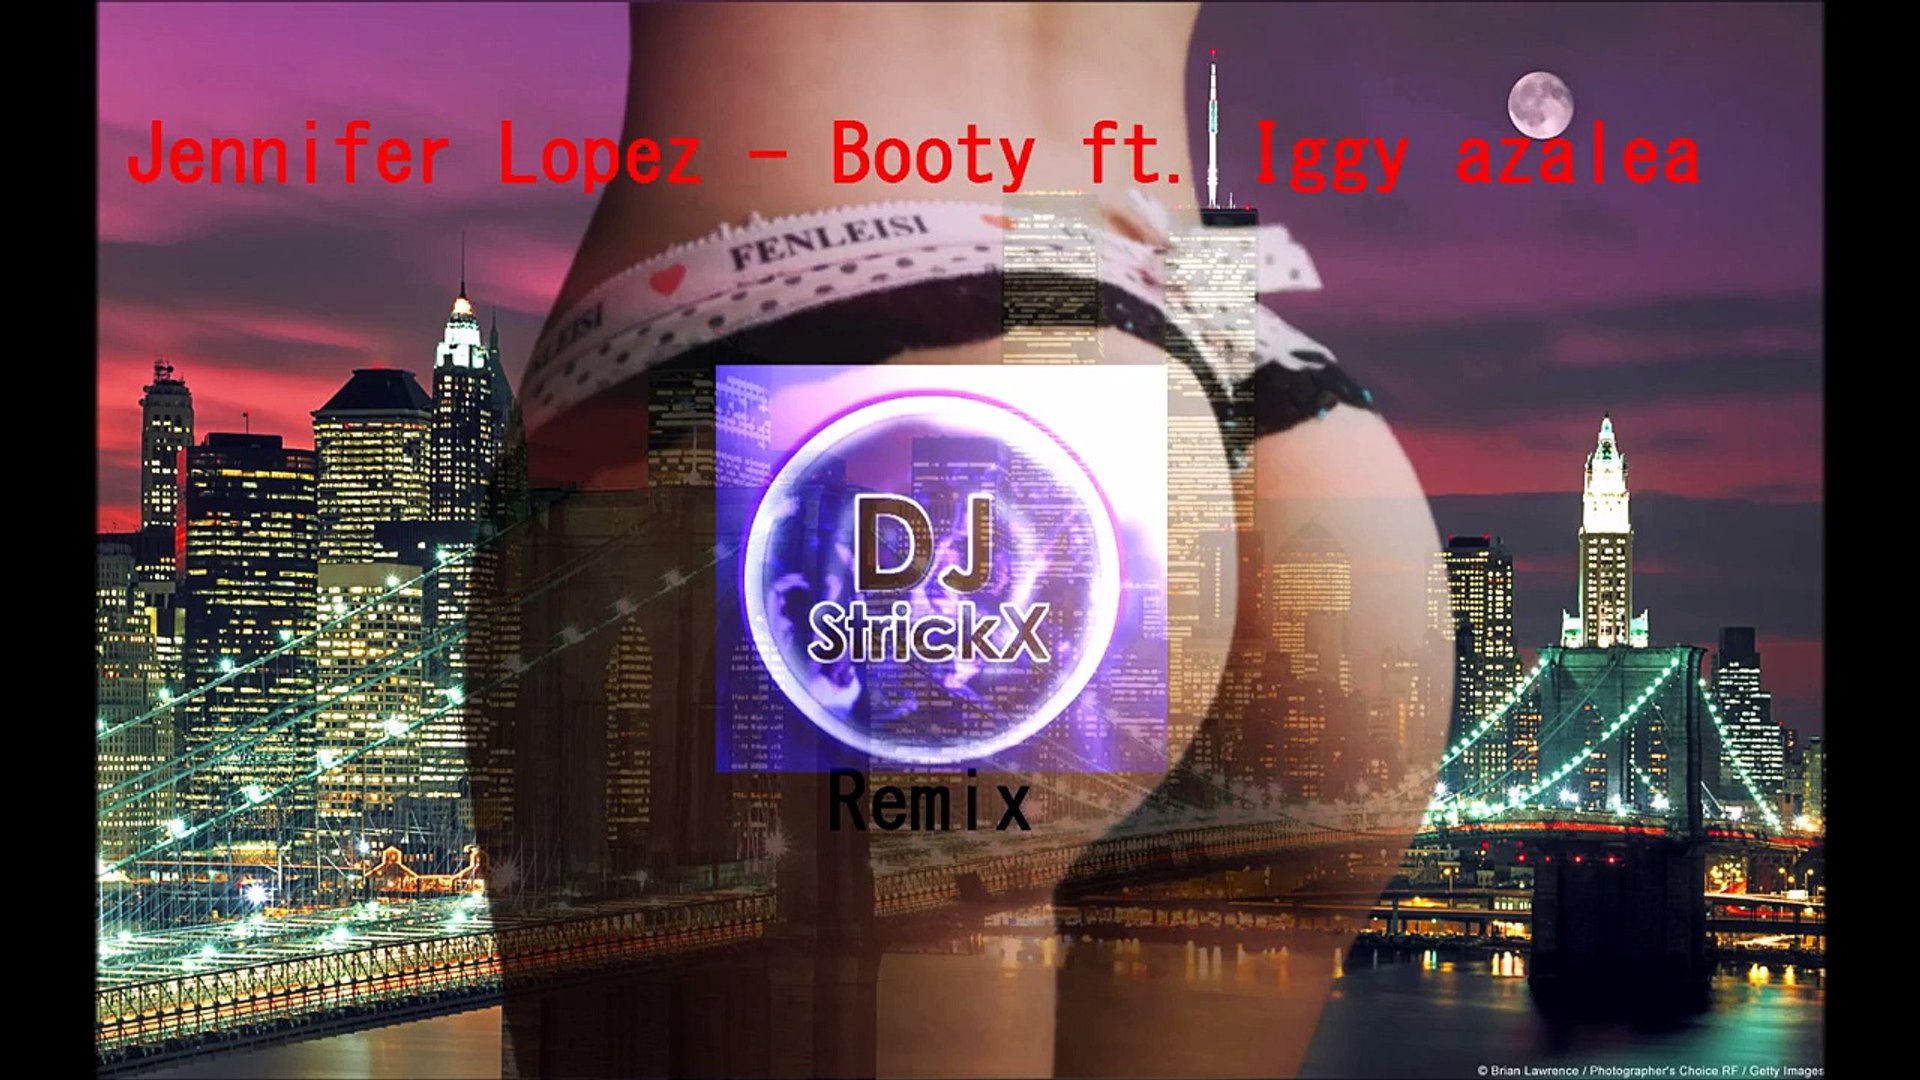 Jennifer lopez - booty ft. Iggy Azalea (DJStrickx Remix) - video Dailymotion